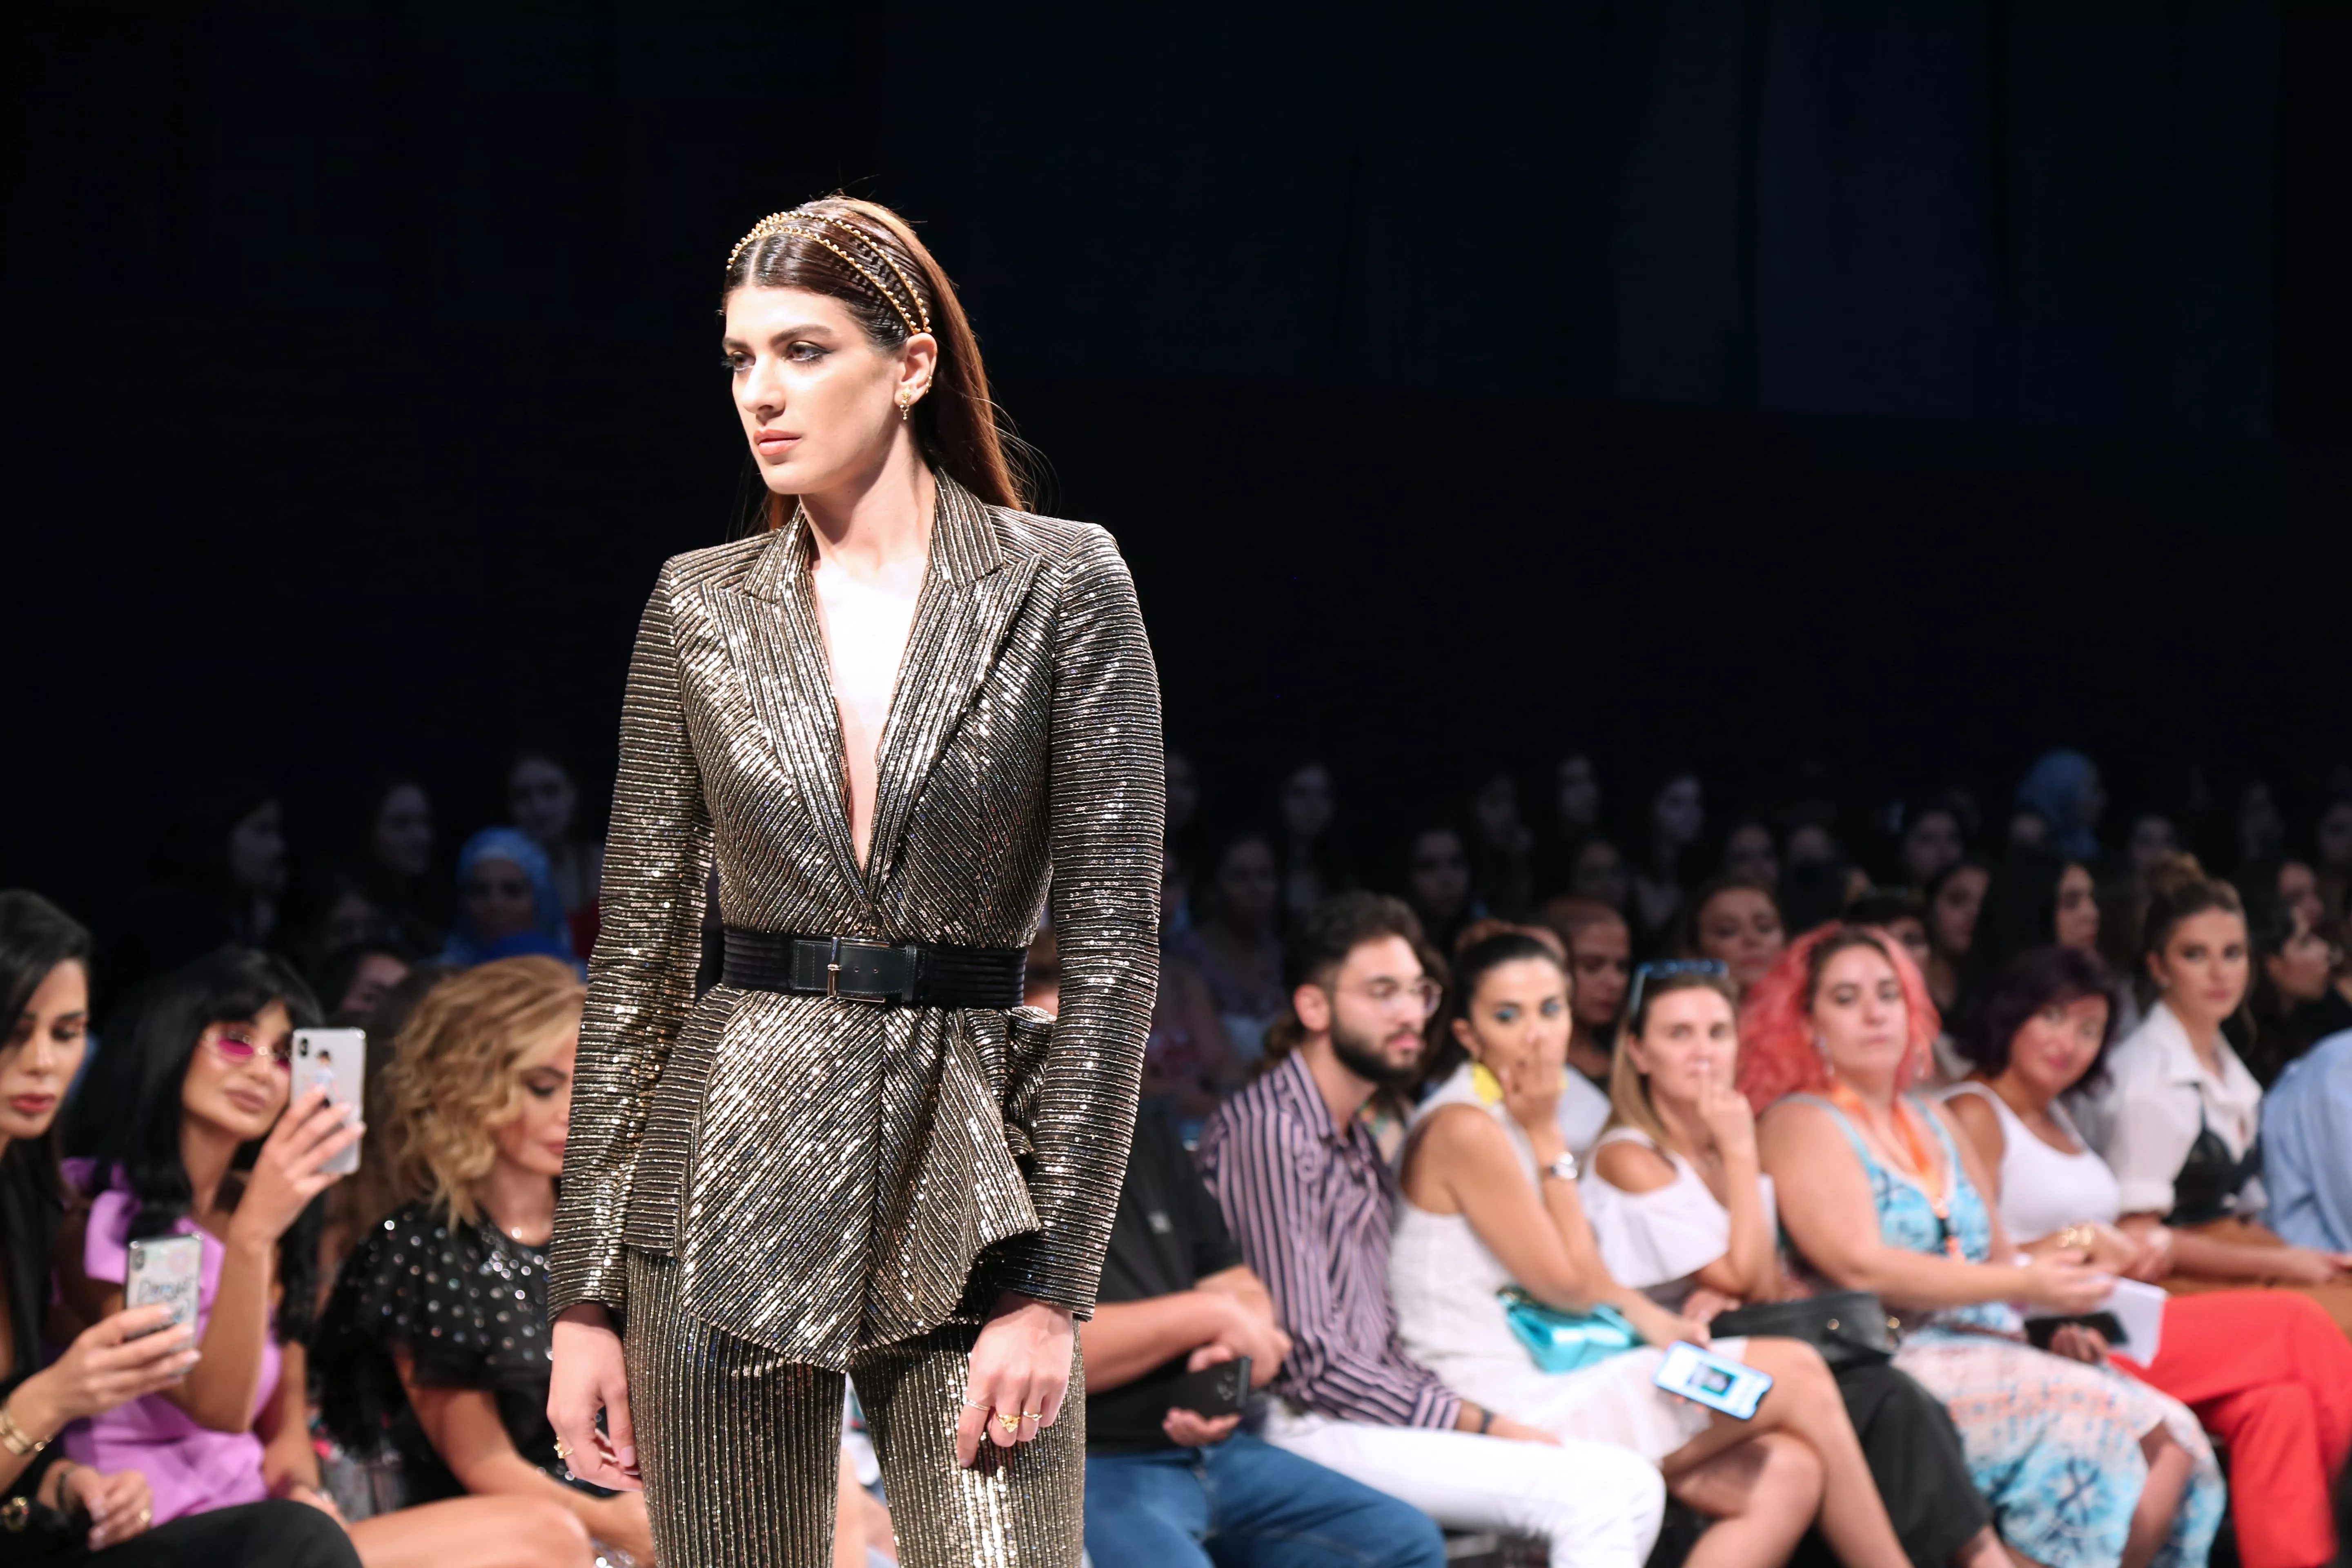 JamaloukiCon 2019: عرض مجموعة Ingie Paris لخريف 2019 في حدث الموضة والجمال الأضخم عربياً